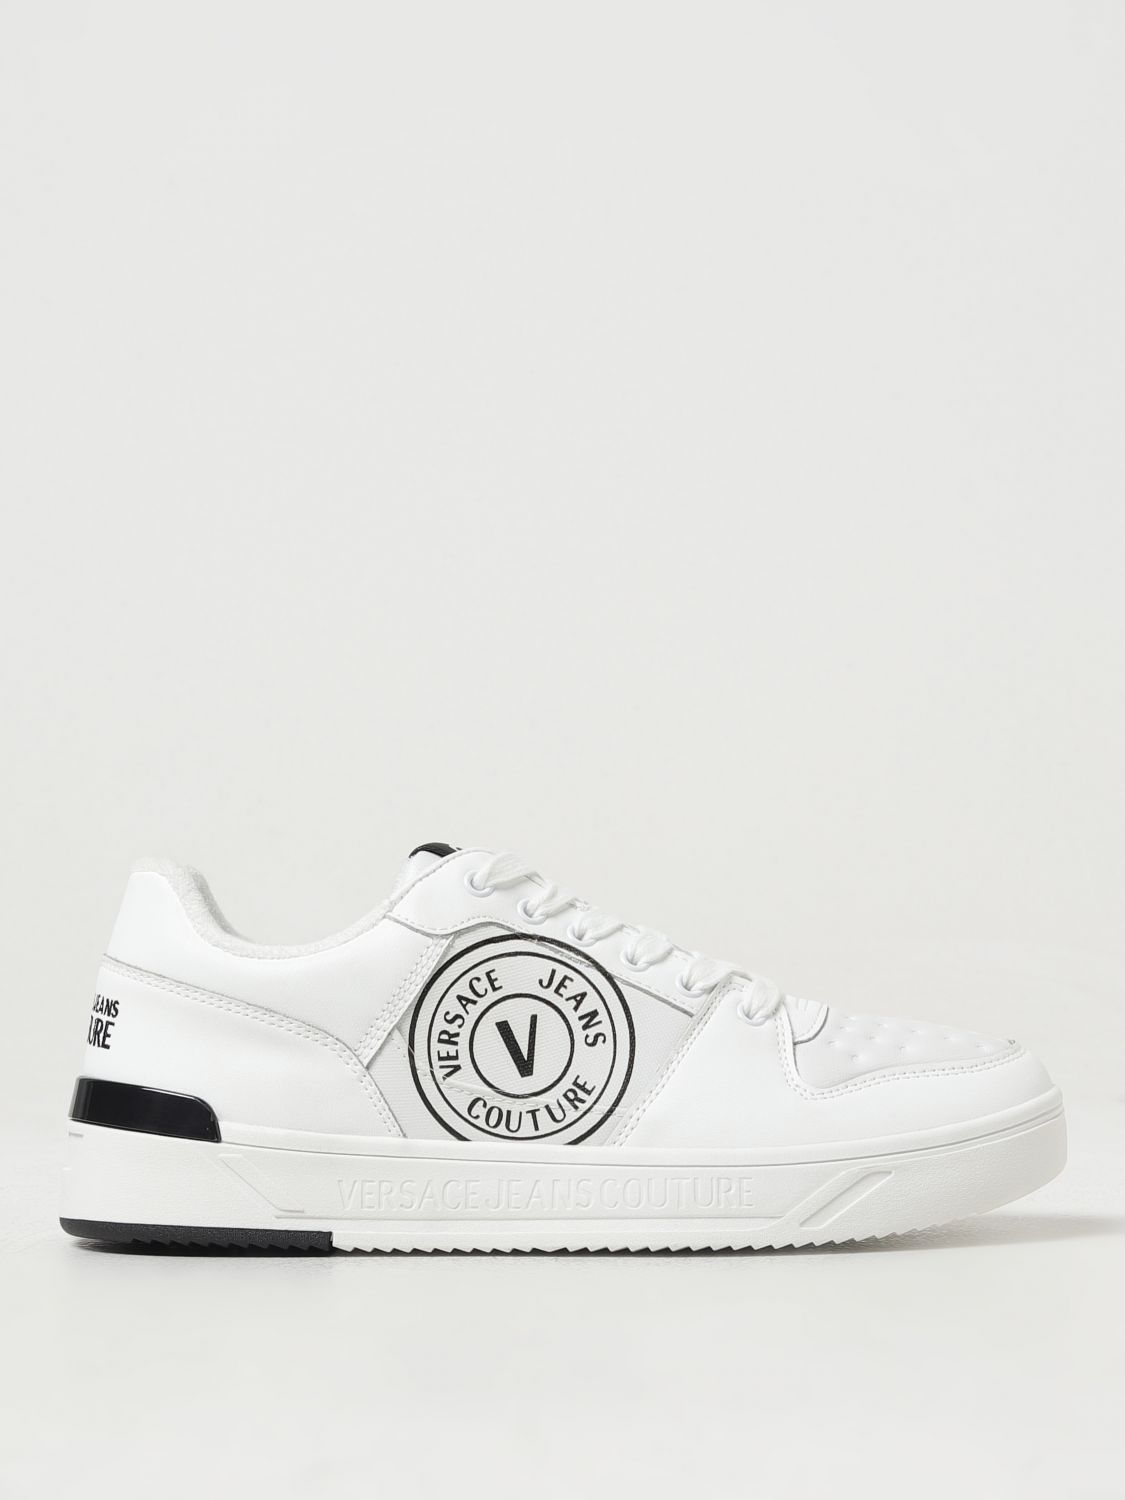 Shop Versace Jeans Couture Sneakers  Men Color White